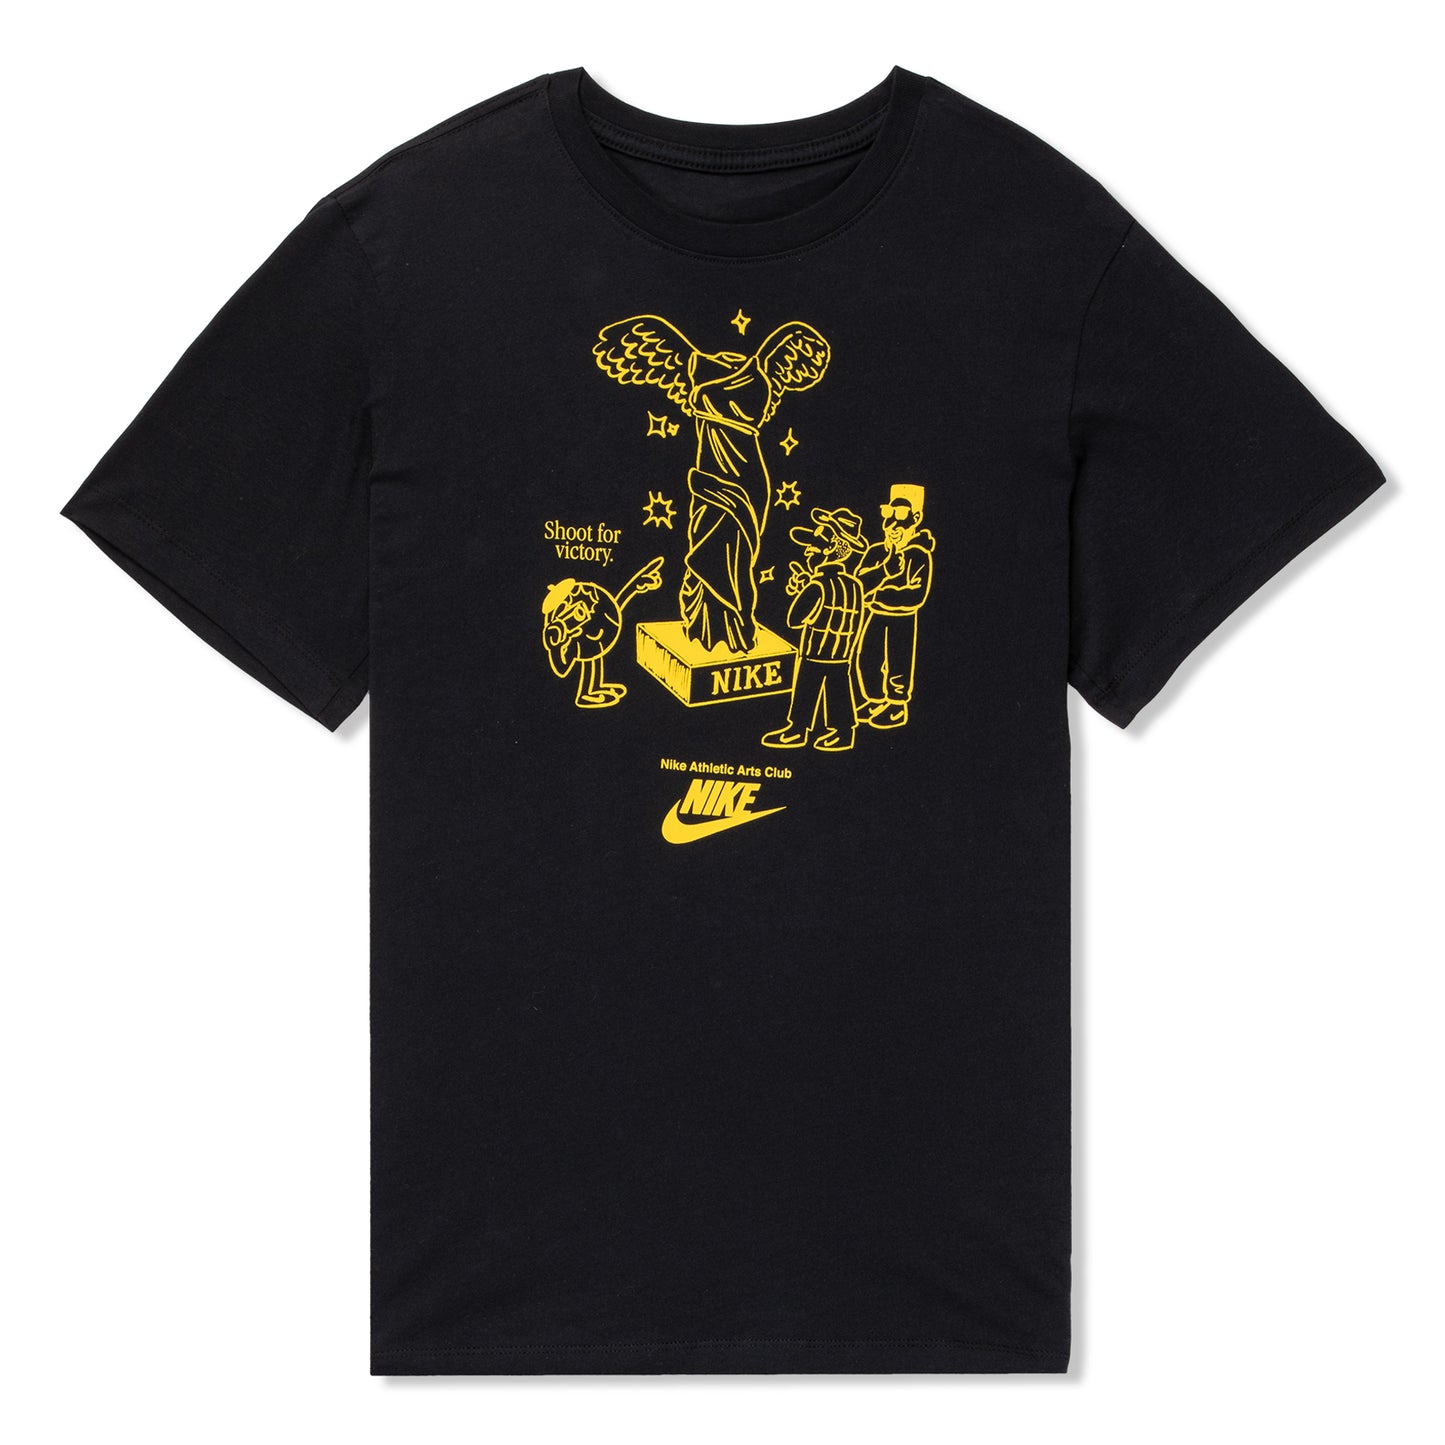 Nike Sportswear T-Shirt (Black)